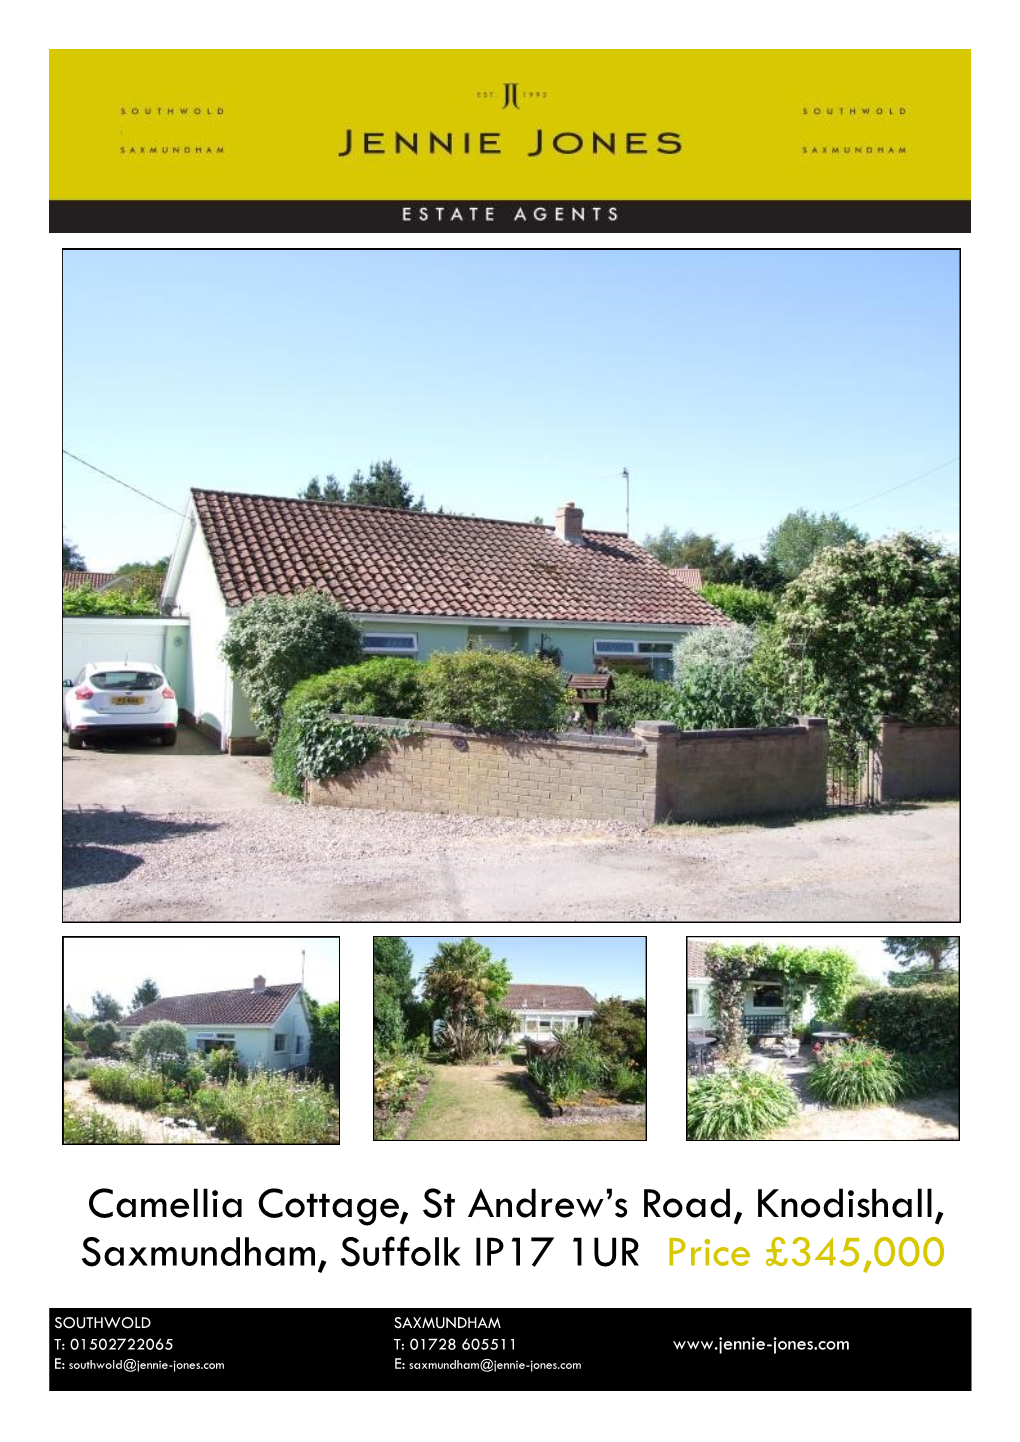 Camellia Cottage, St Andrew's Road, Knodishall, Saxmundham, Suffolk IP17 1UR Price £345,000